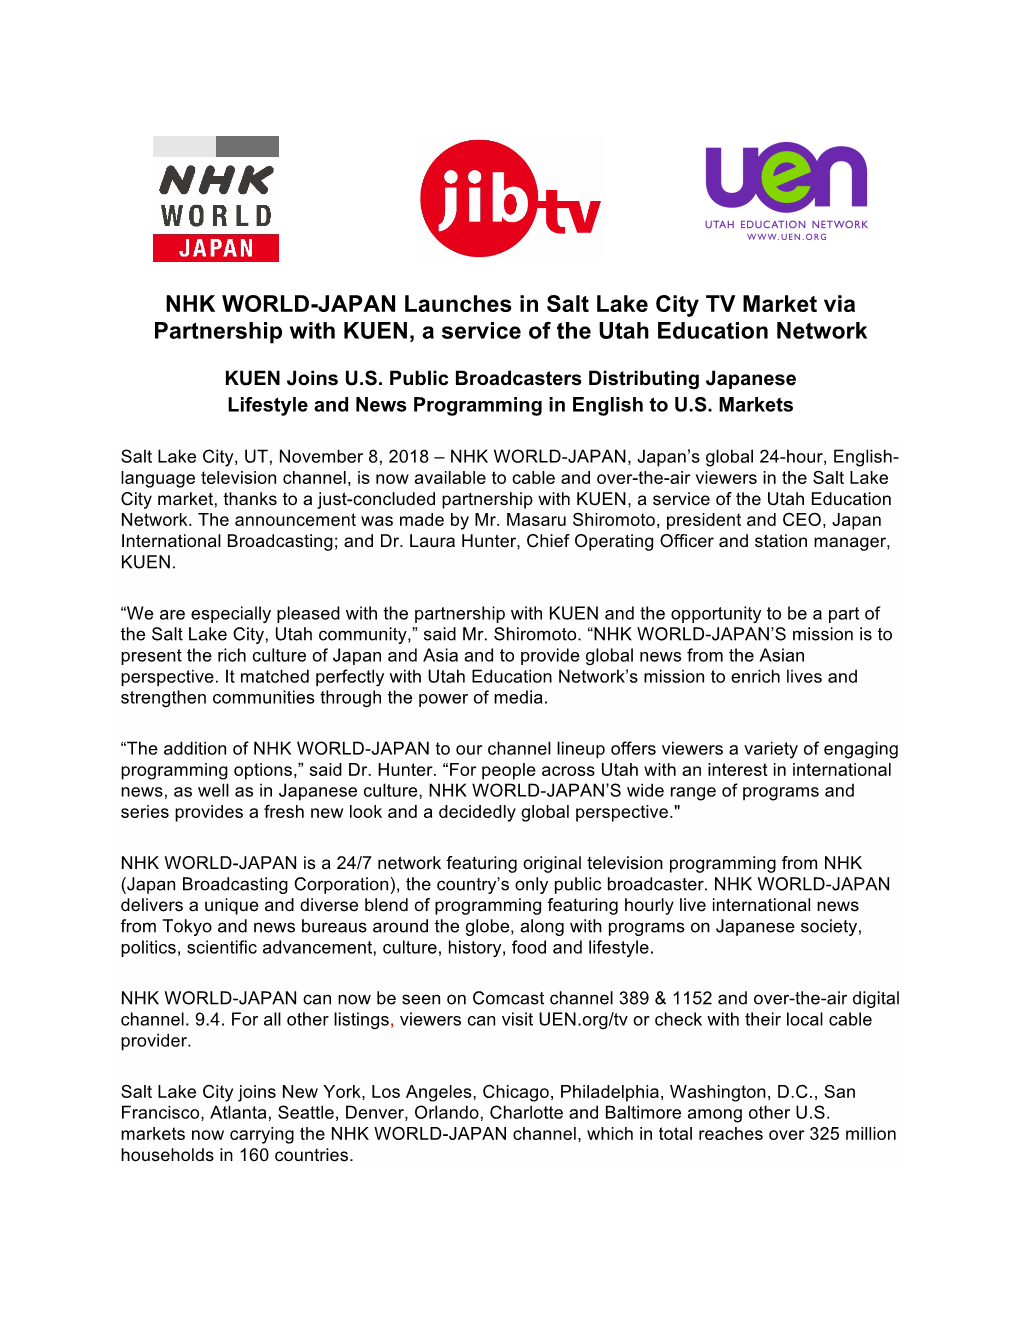 NHK WORLD-JAPAN Launches in Salt Lake City TV Market Via Partnership with KUEN, a Service of the Utah Education Network